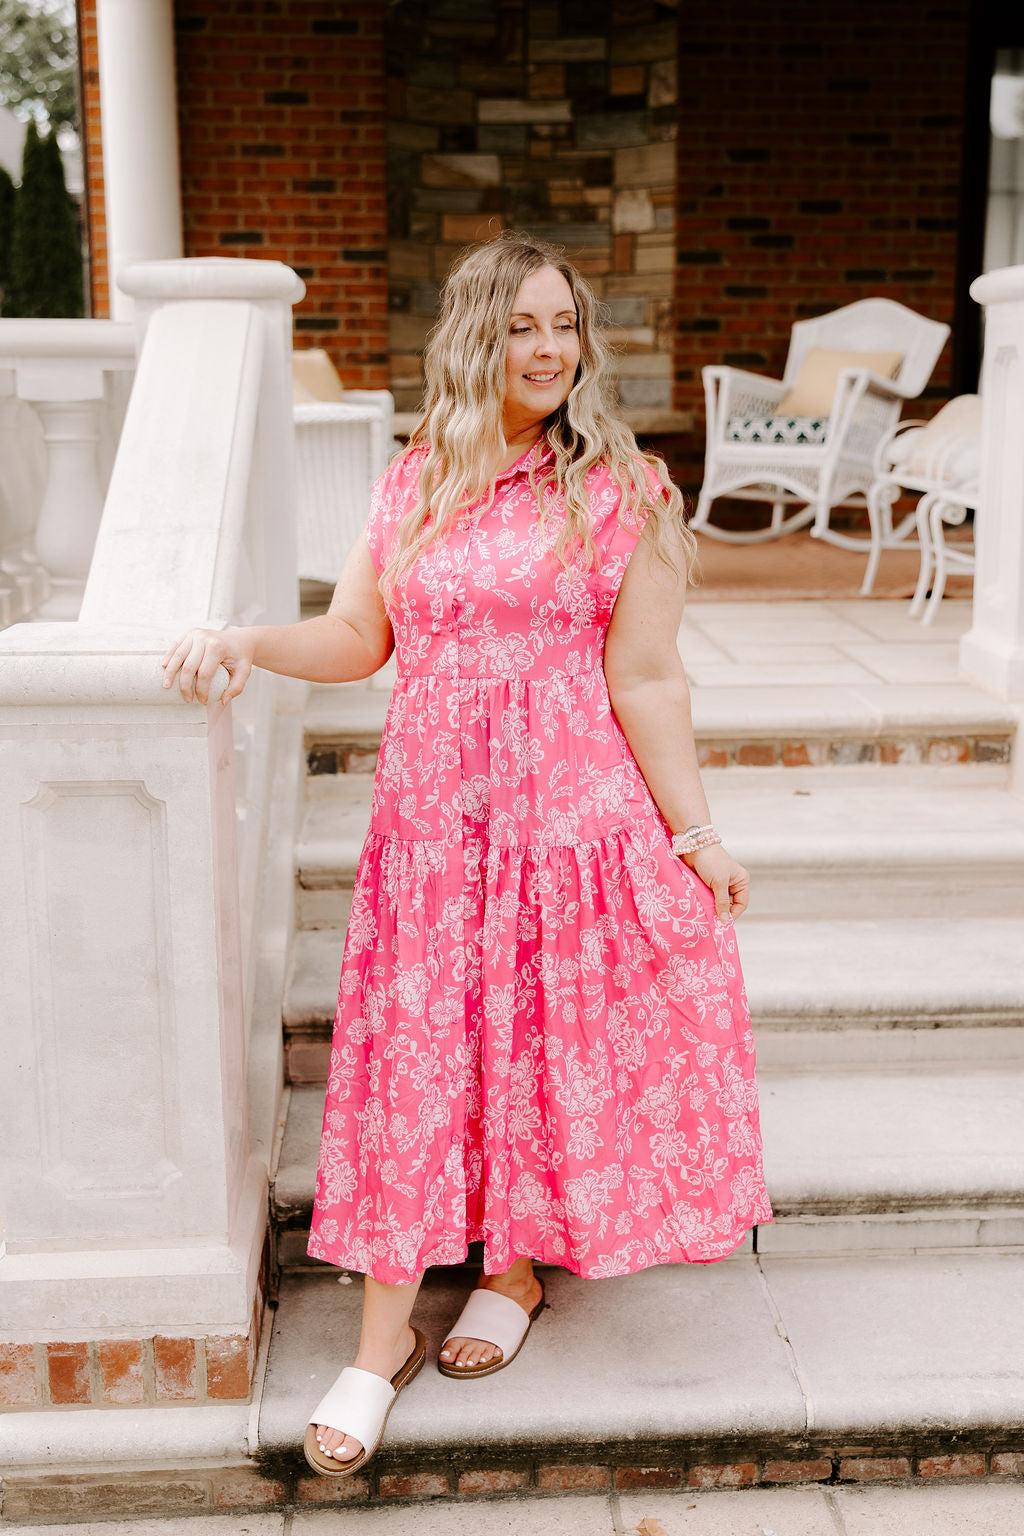 Downtown Charleston Hot Pink Midi Dress